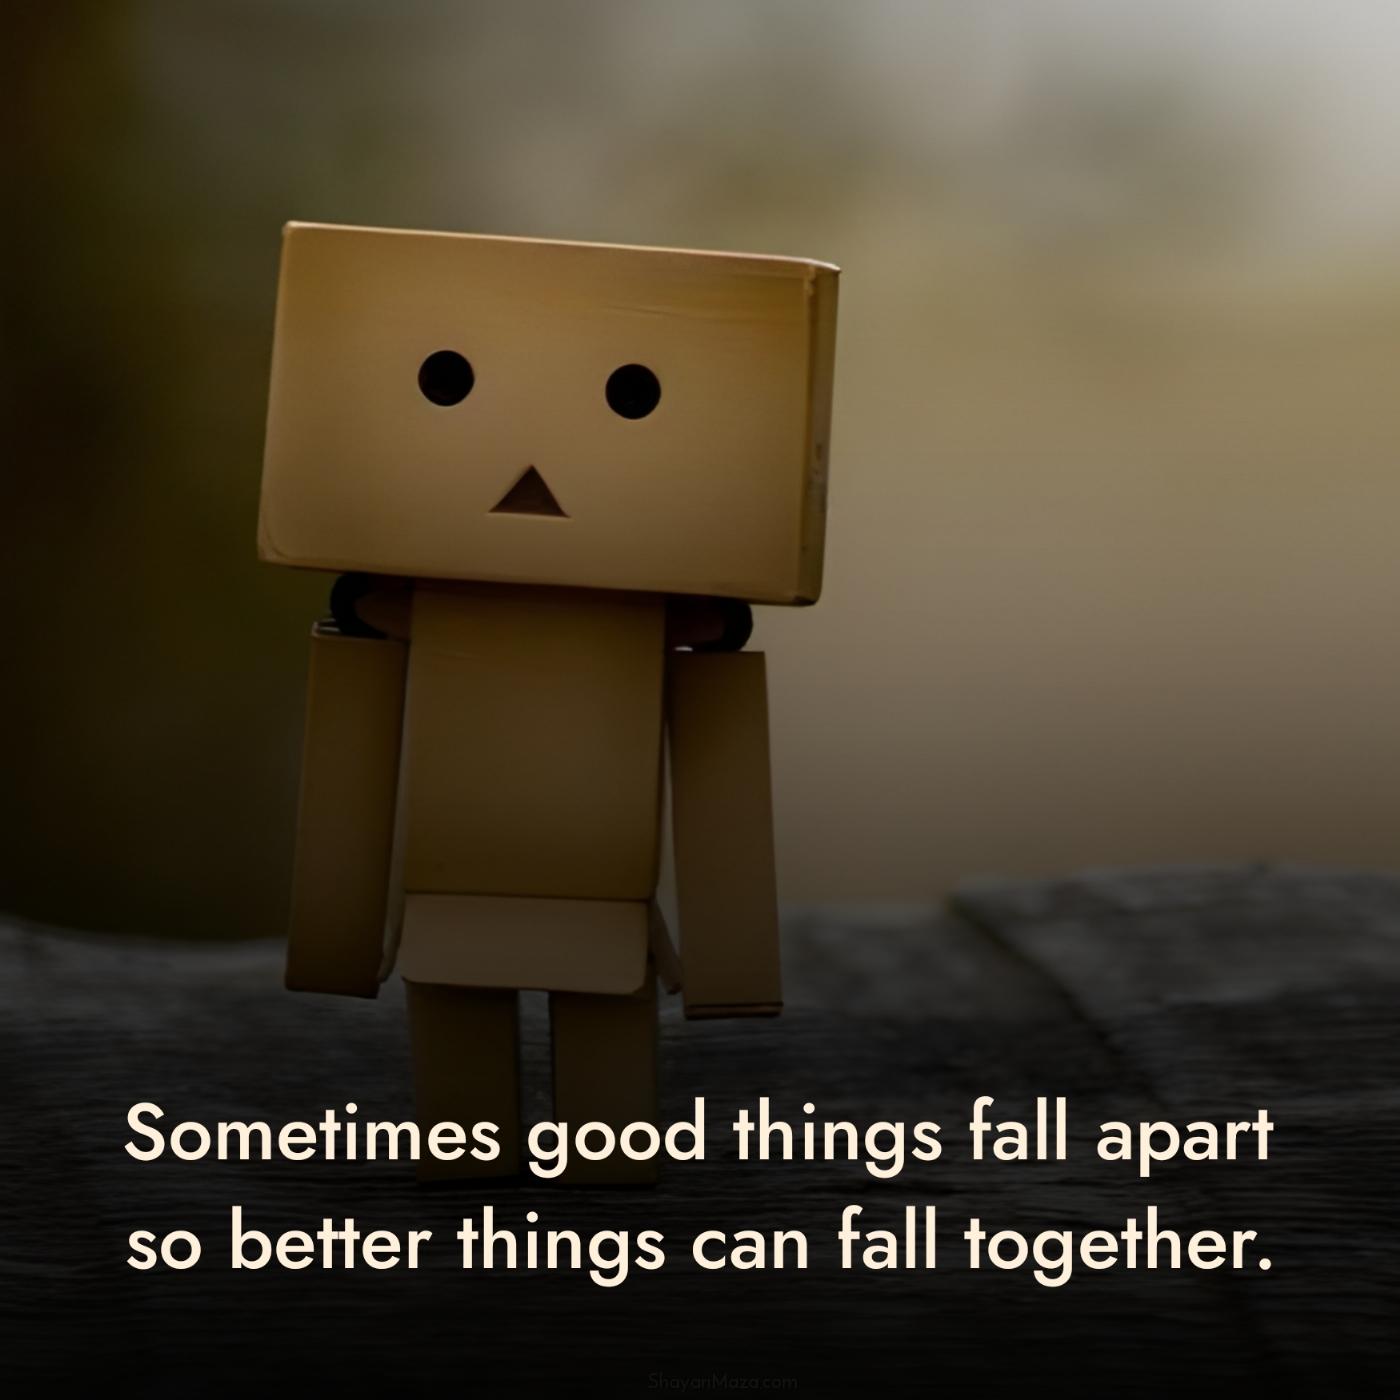 Sometimes good things fall apart so better things